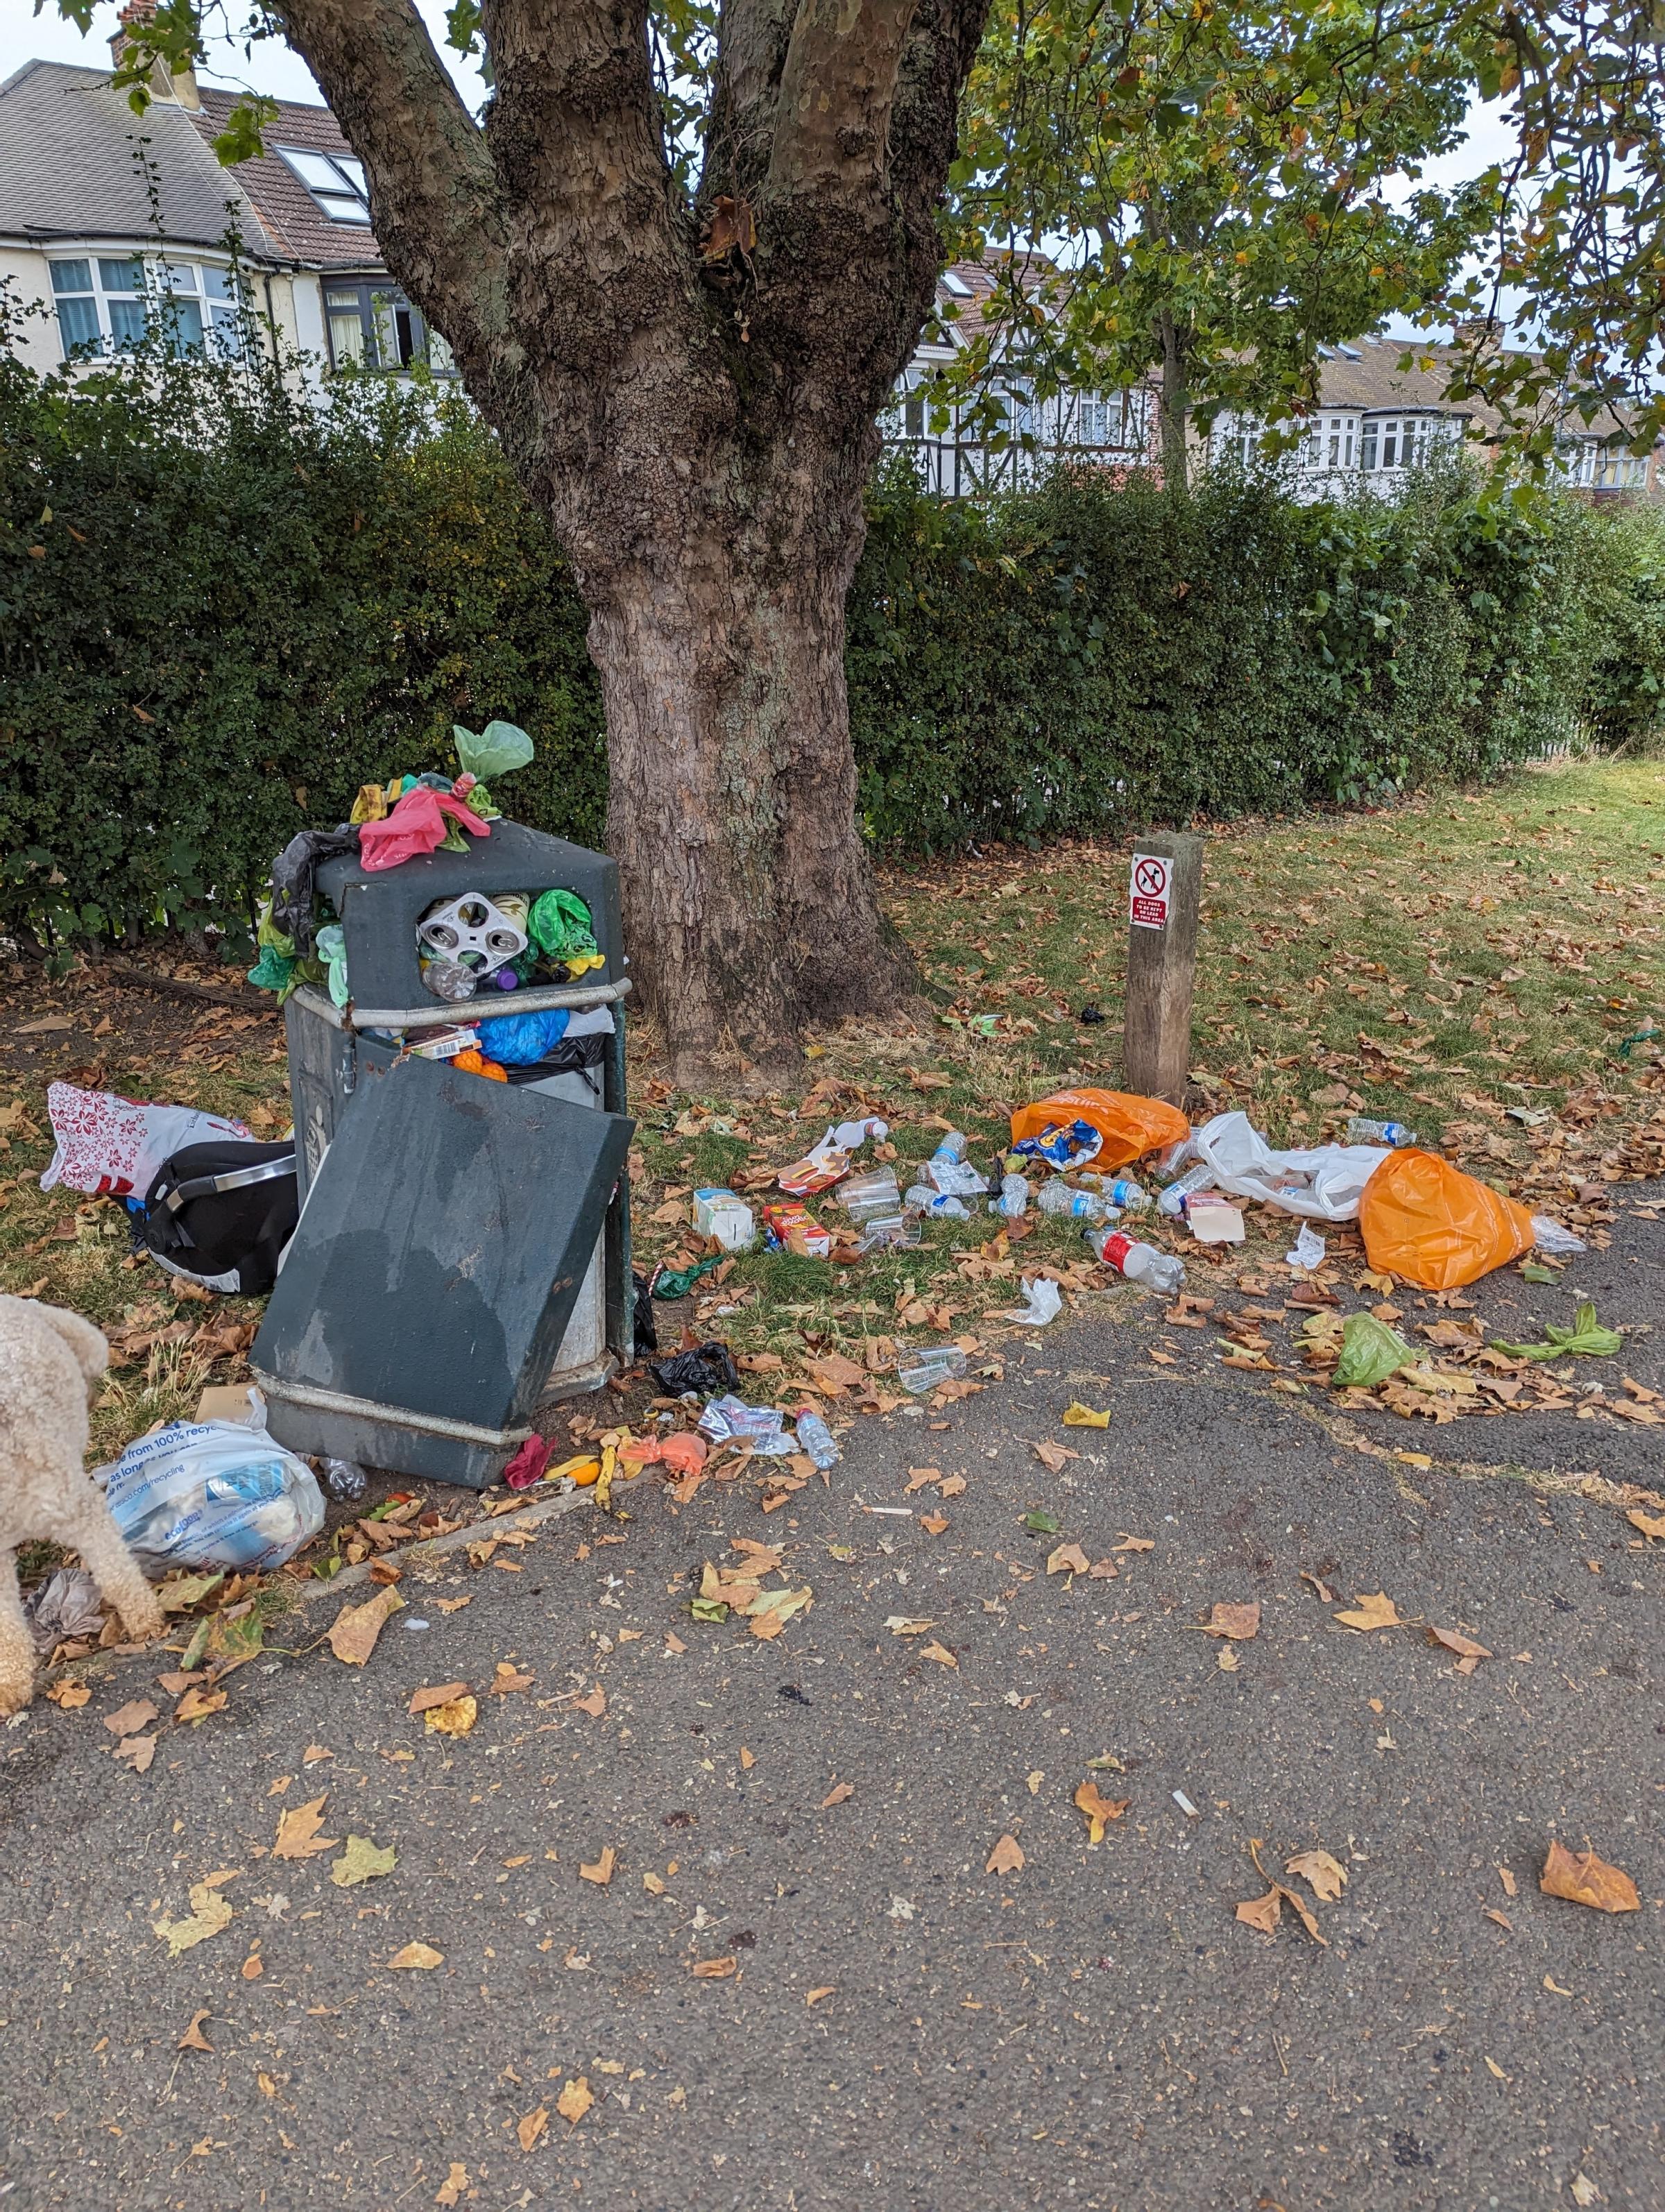 Overflowing Bins At King Edwards VII Rec. Residents claim the bins at King Edwards VII are overflowing with dog poo and rubbish’. Image Credit: Josh Mendelsohn